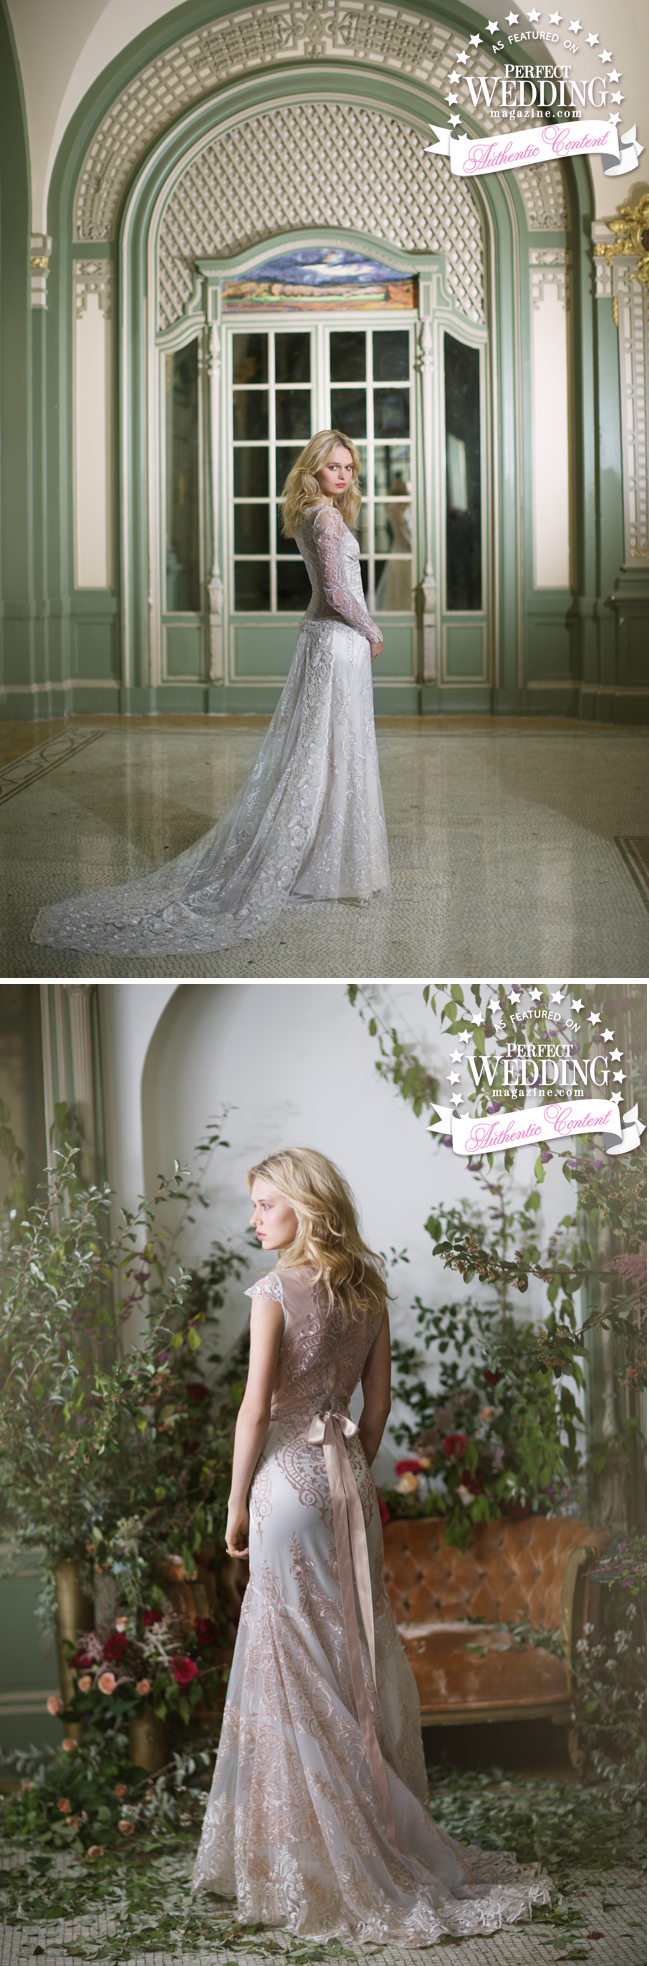 Claire Pettibone, The Gilded Age, Perfect Wedding Magazine, Bridal fashion, Bridal Fall 2016, Bridal Trends